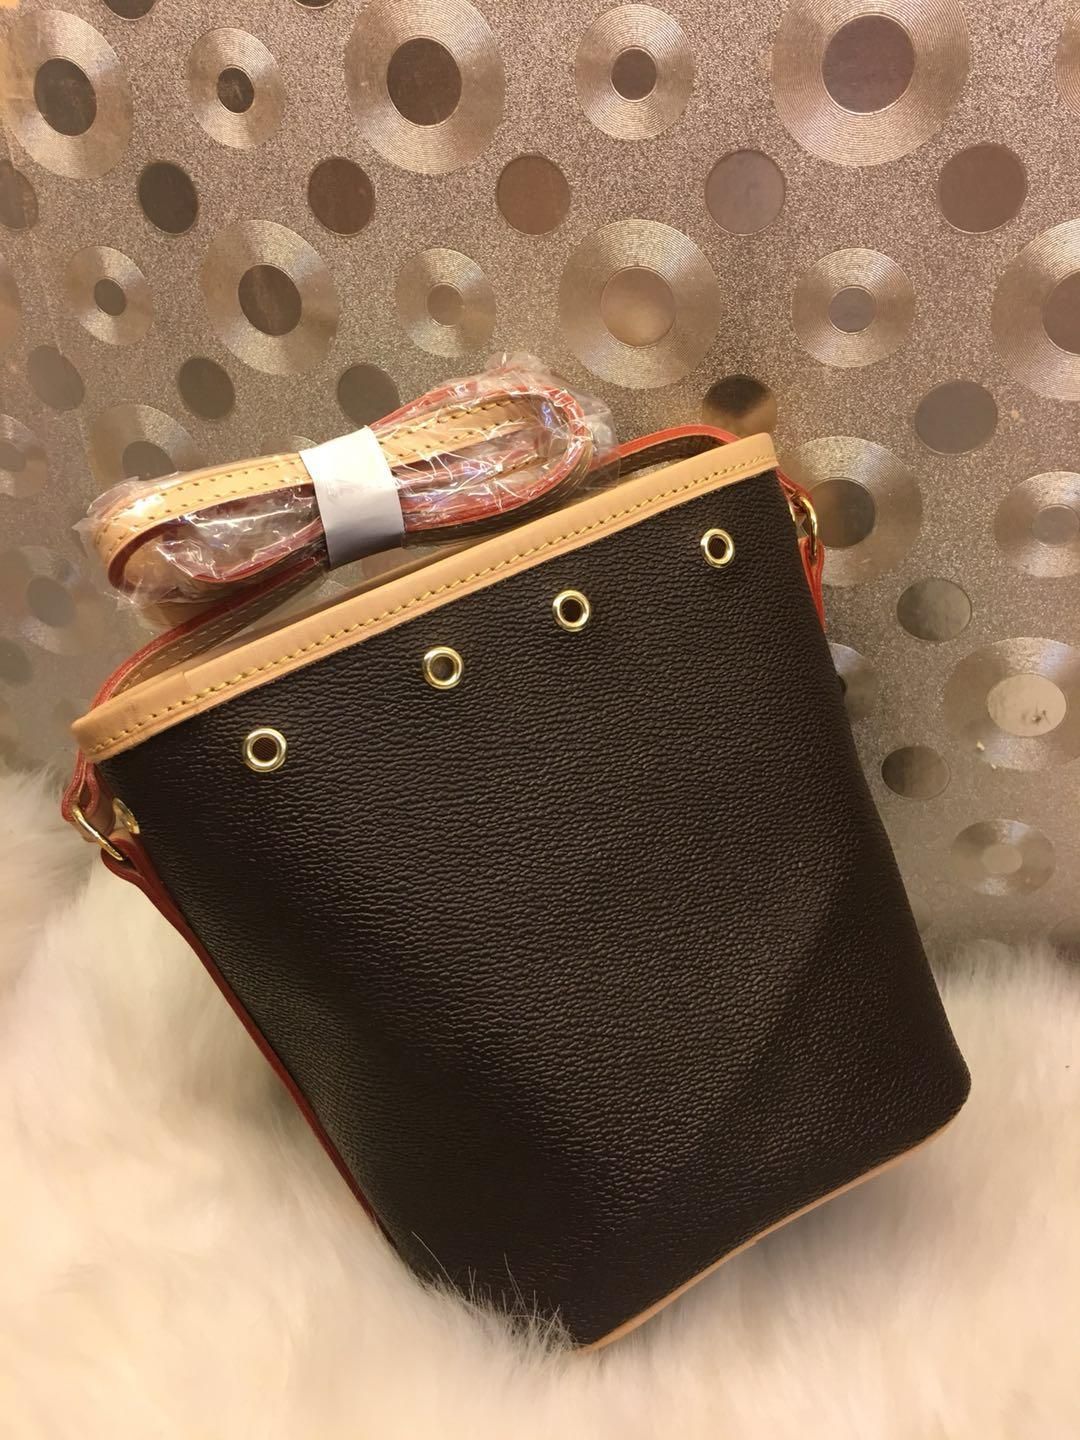 branded purse